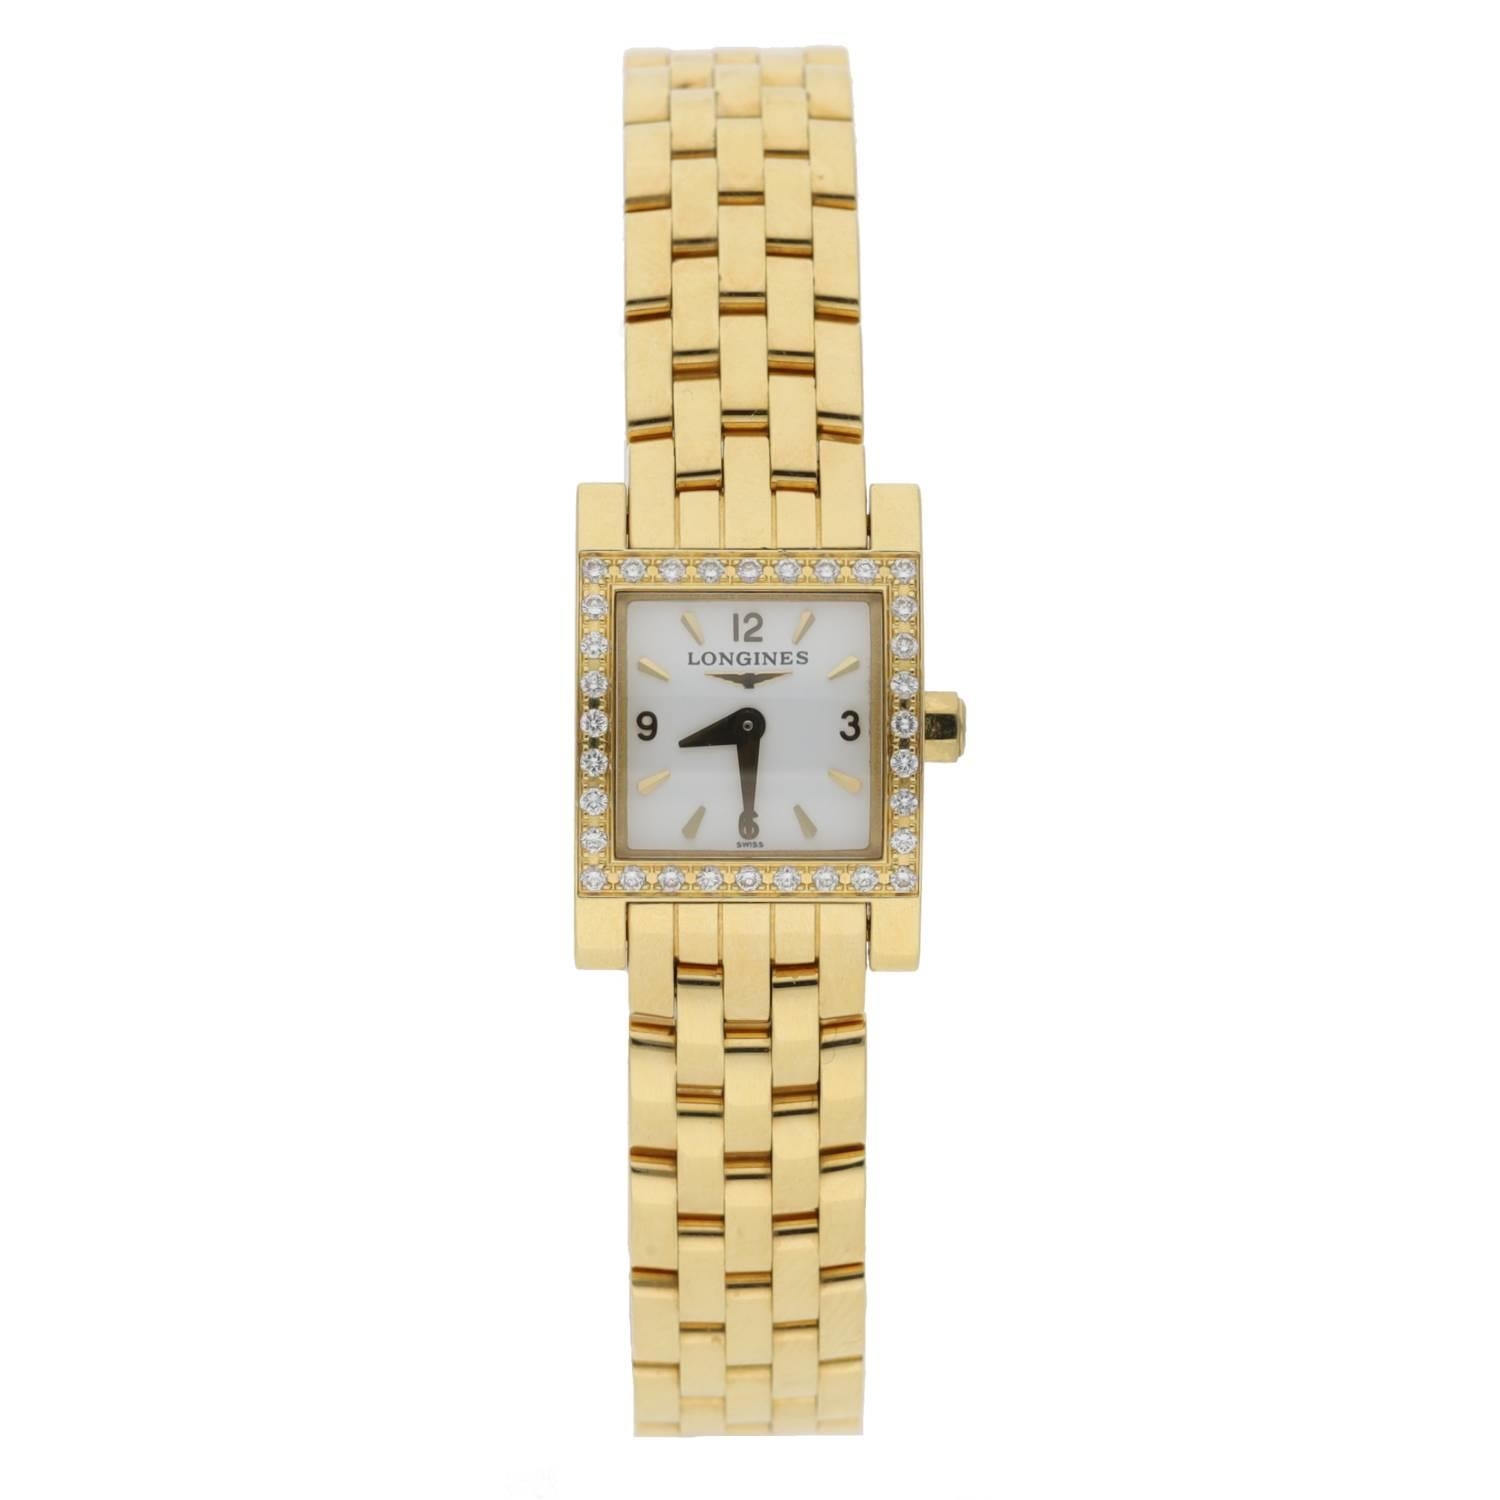 Longines Dolce Vita 18ct diamond set lady's wristwatch, reference no. L5 161 7, serial no. 30250xxx,